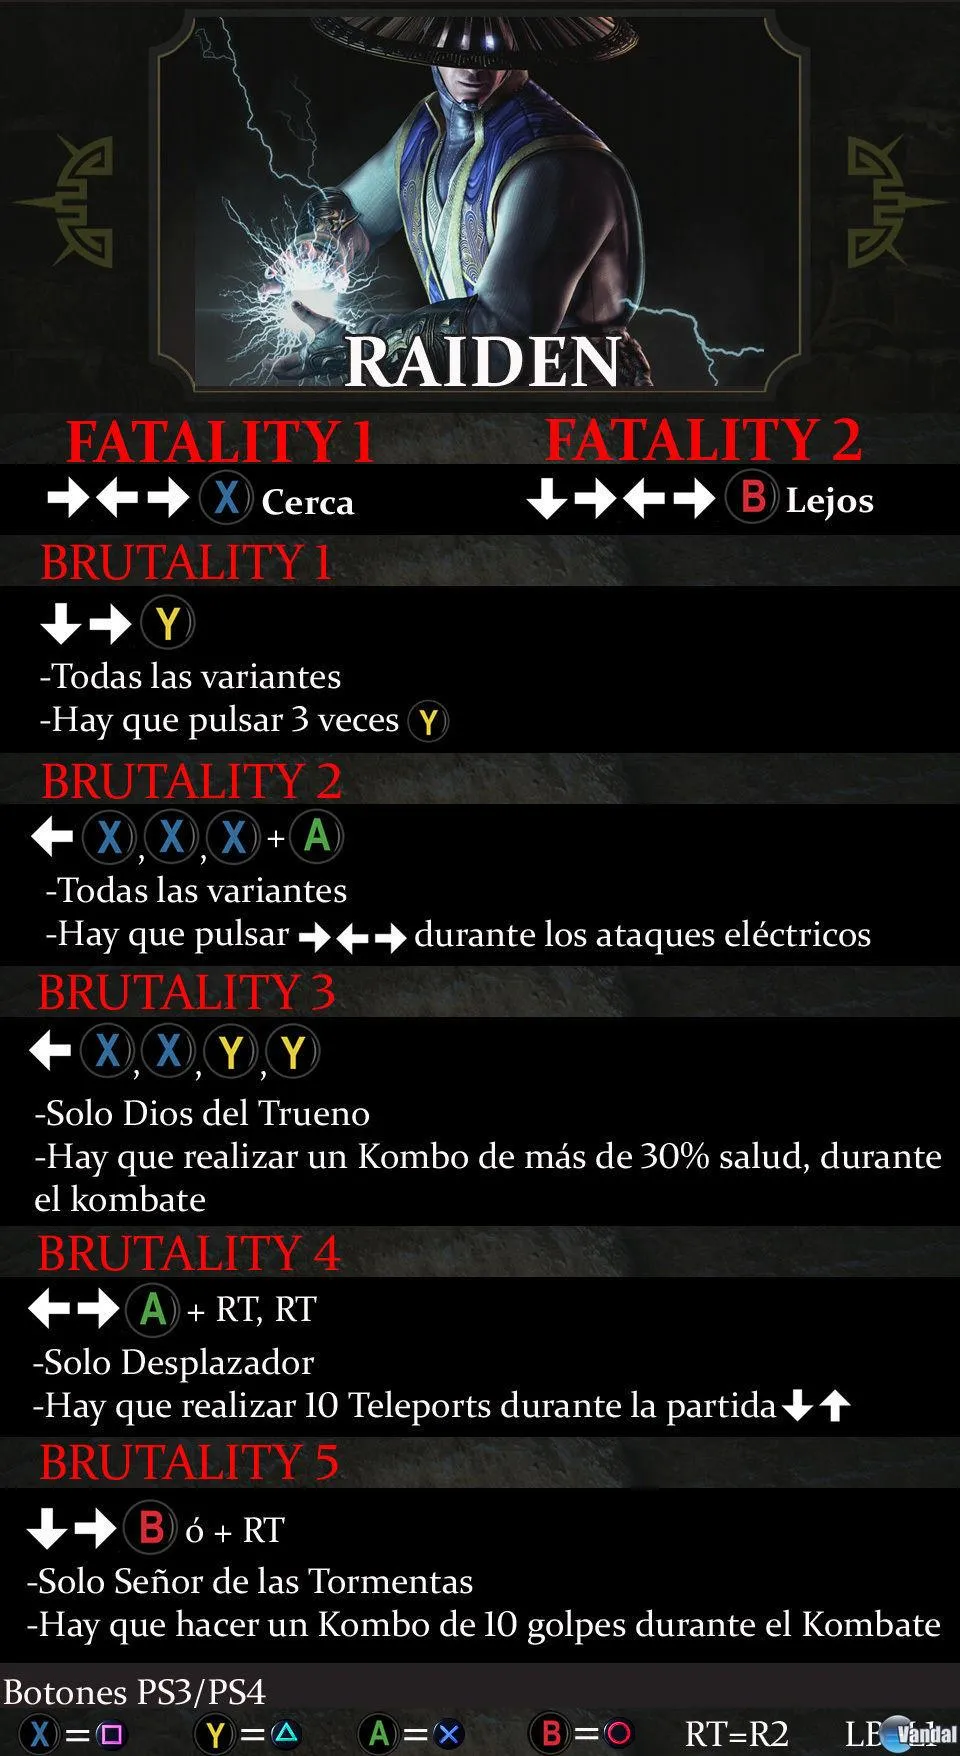 Mortal Kombat 9 Komplete Edition ( PS3 ) : Raiden ( Fatalities + X-RAY ) 